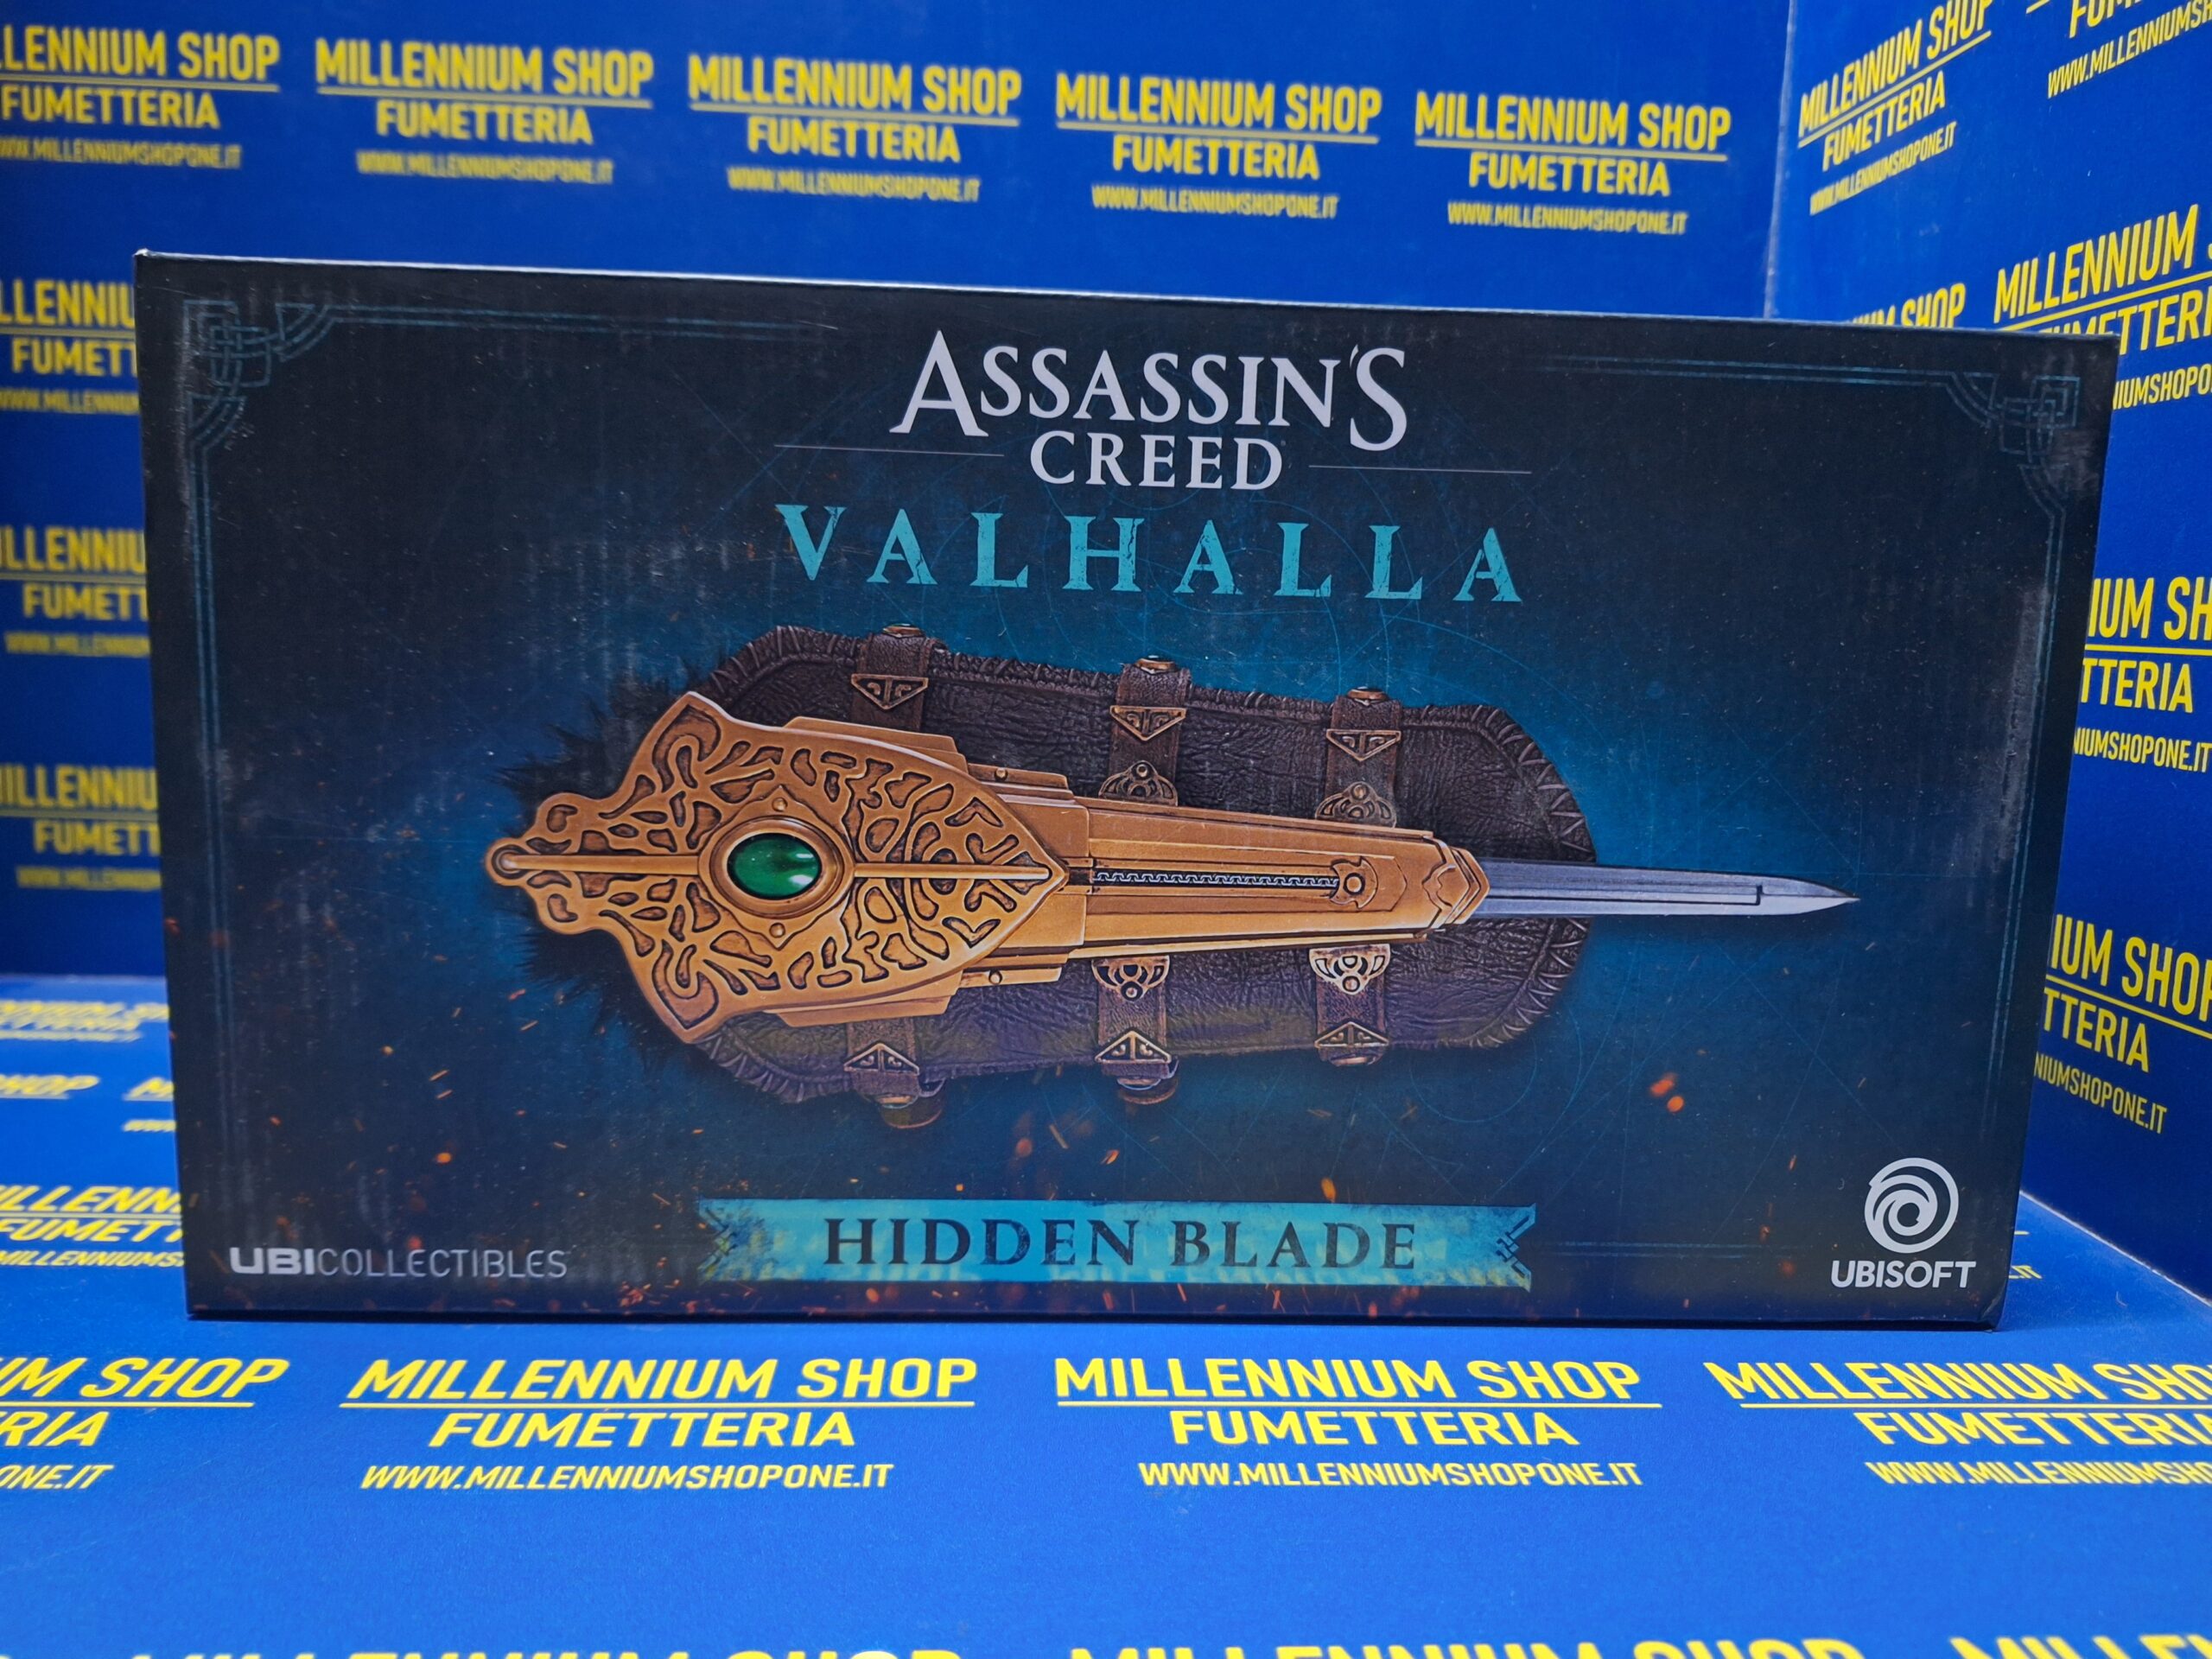 Hidden Blade Lama Celata Assassin's Creed Valhalla by ubisoft Pure Arts -  Millennium shop one